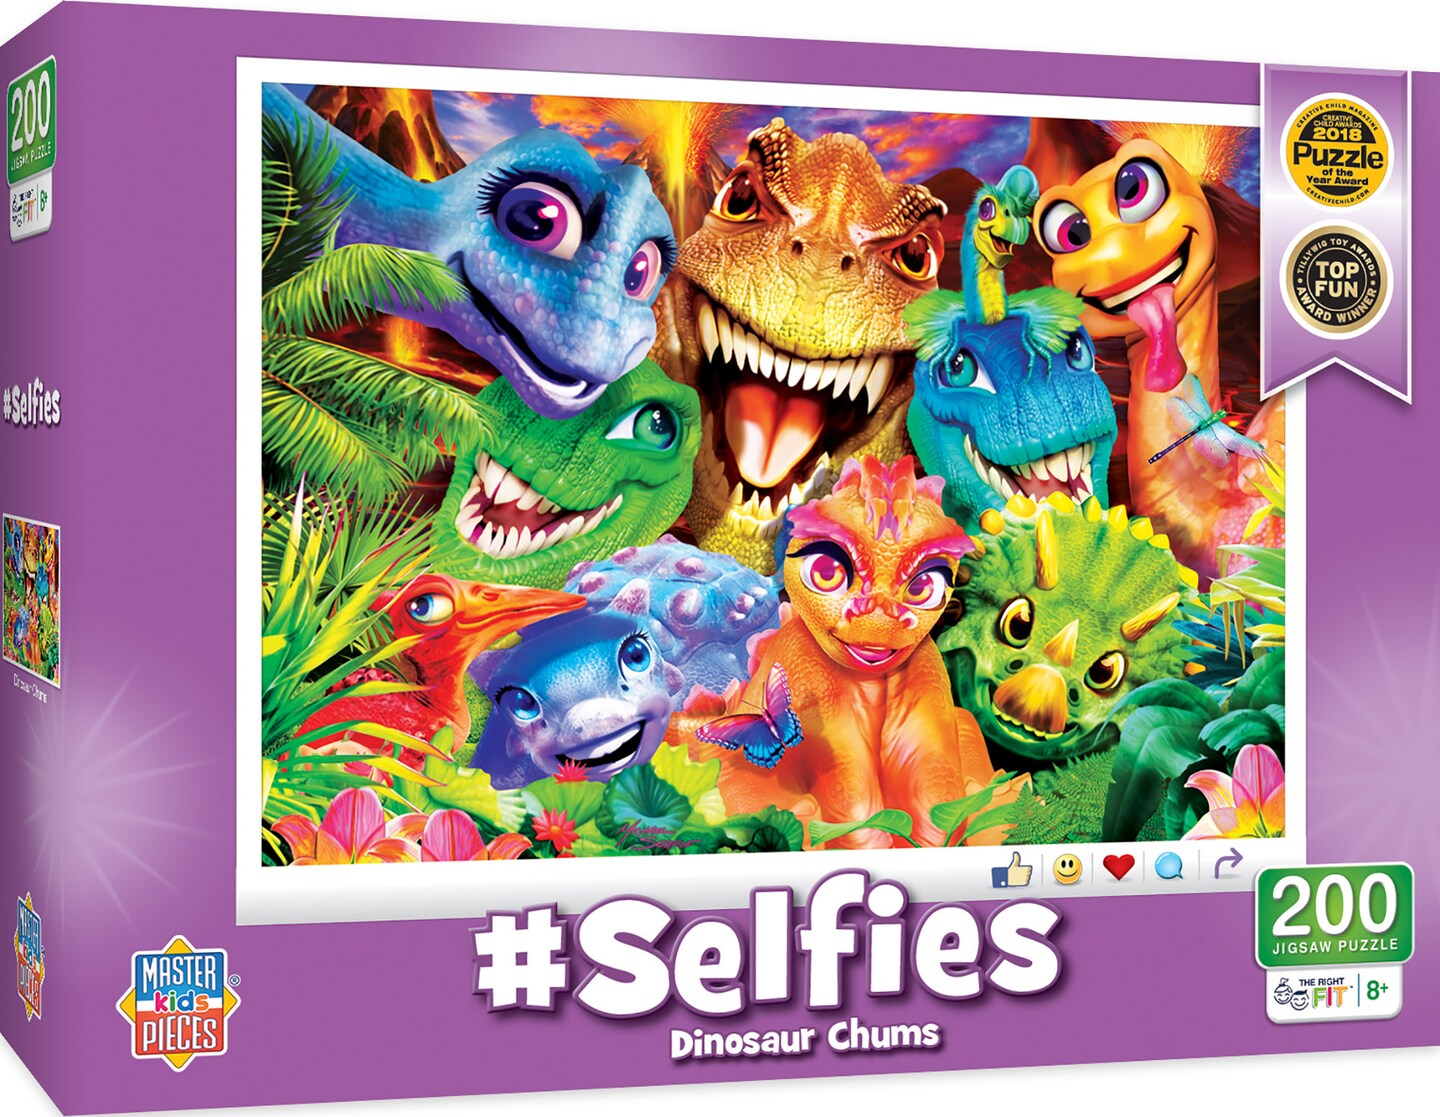 Masterpieces 200 Piece Jigsaw Puzzle for Kids - #Selfies Dinosaur Chums -  14x19